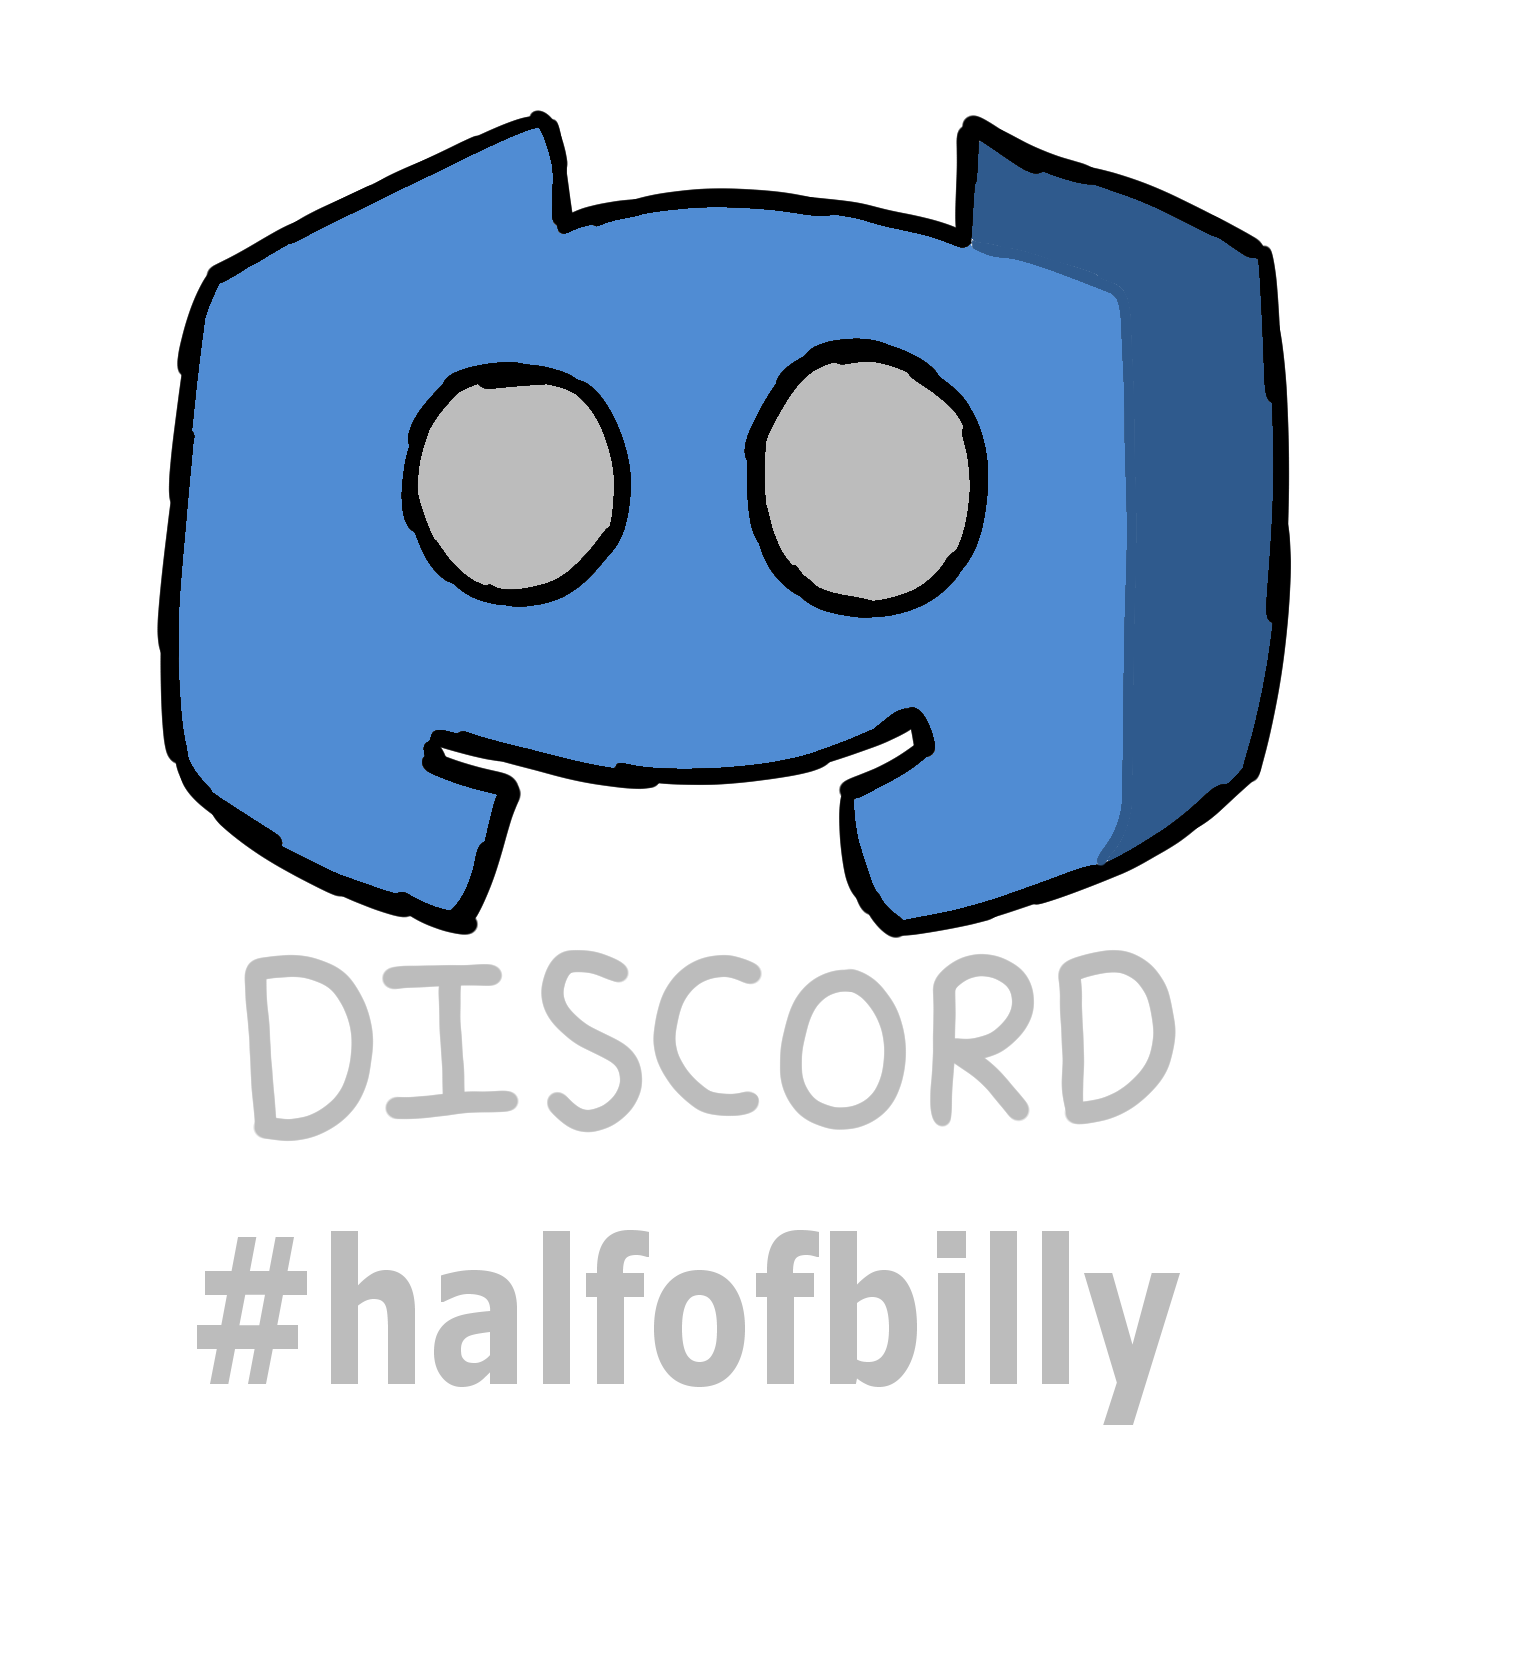 Discord link: #halfofbilly